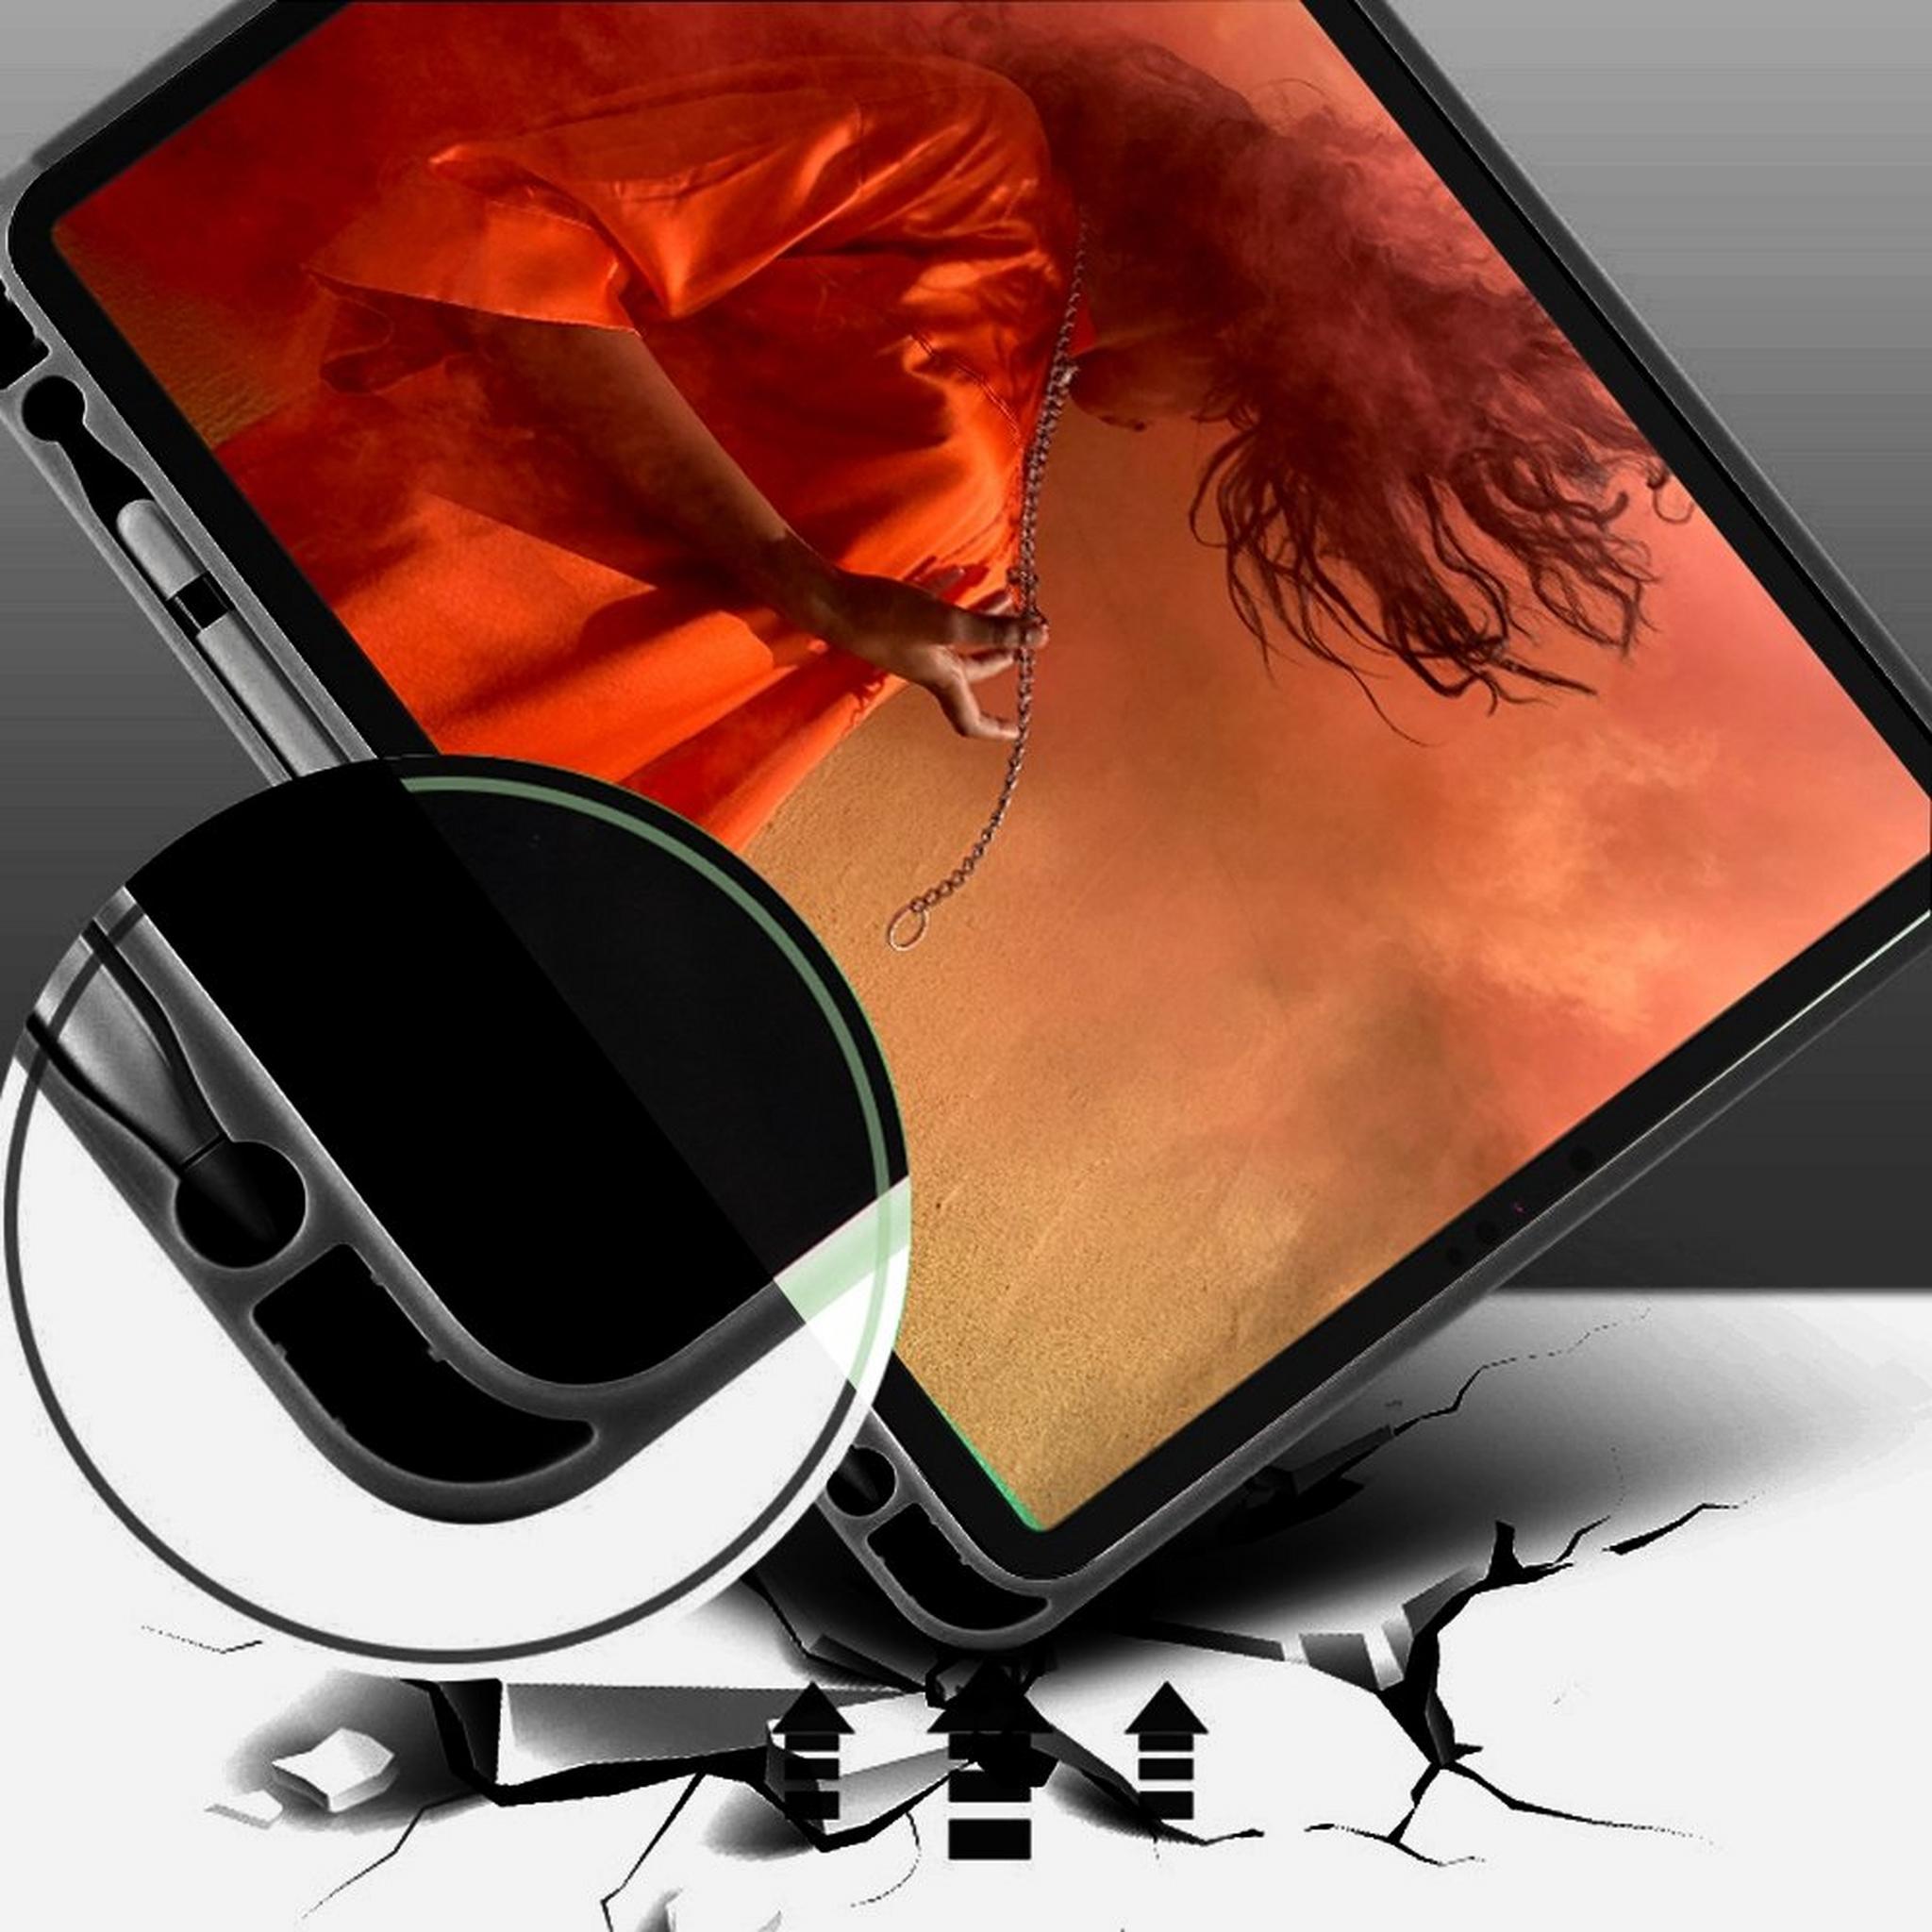 EQ Skin Shock iPad Case 10.2” – Black